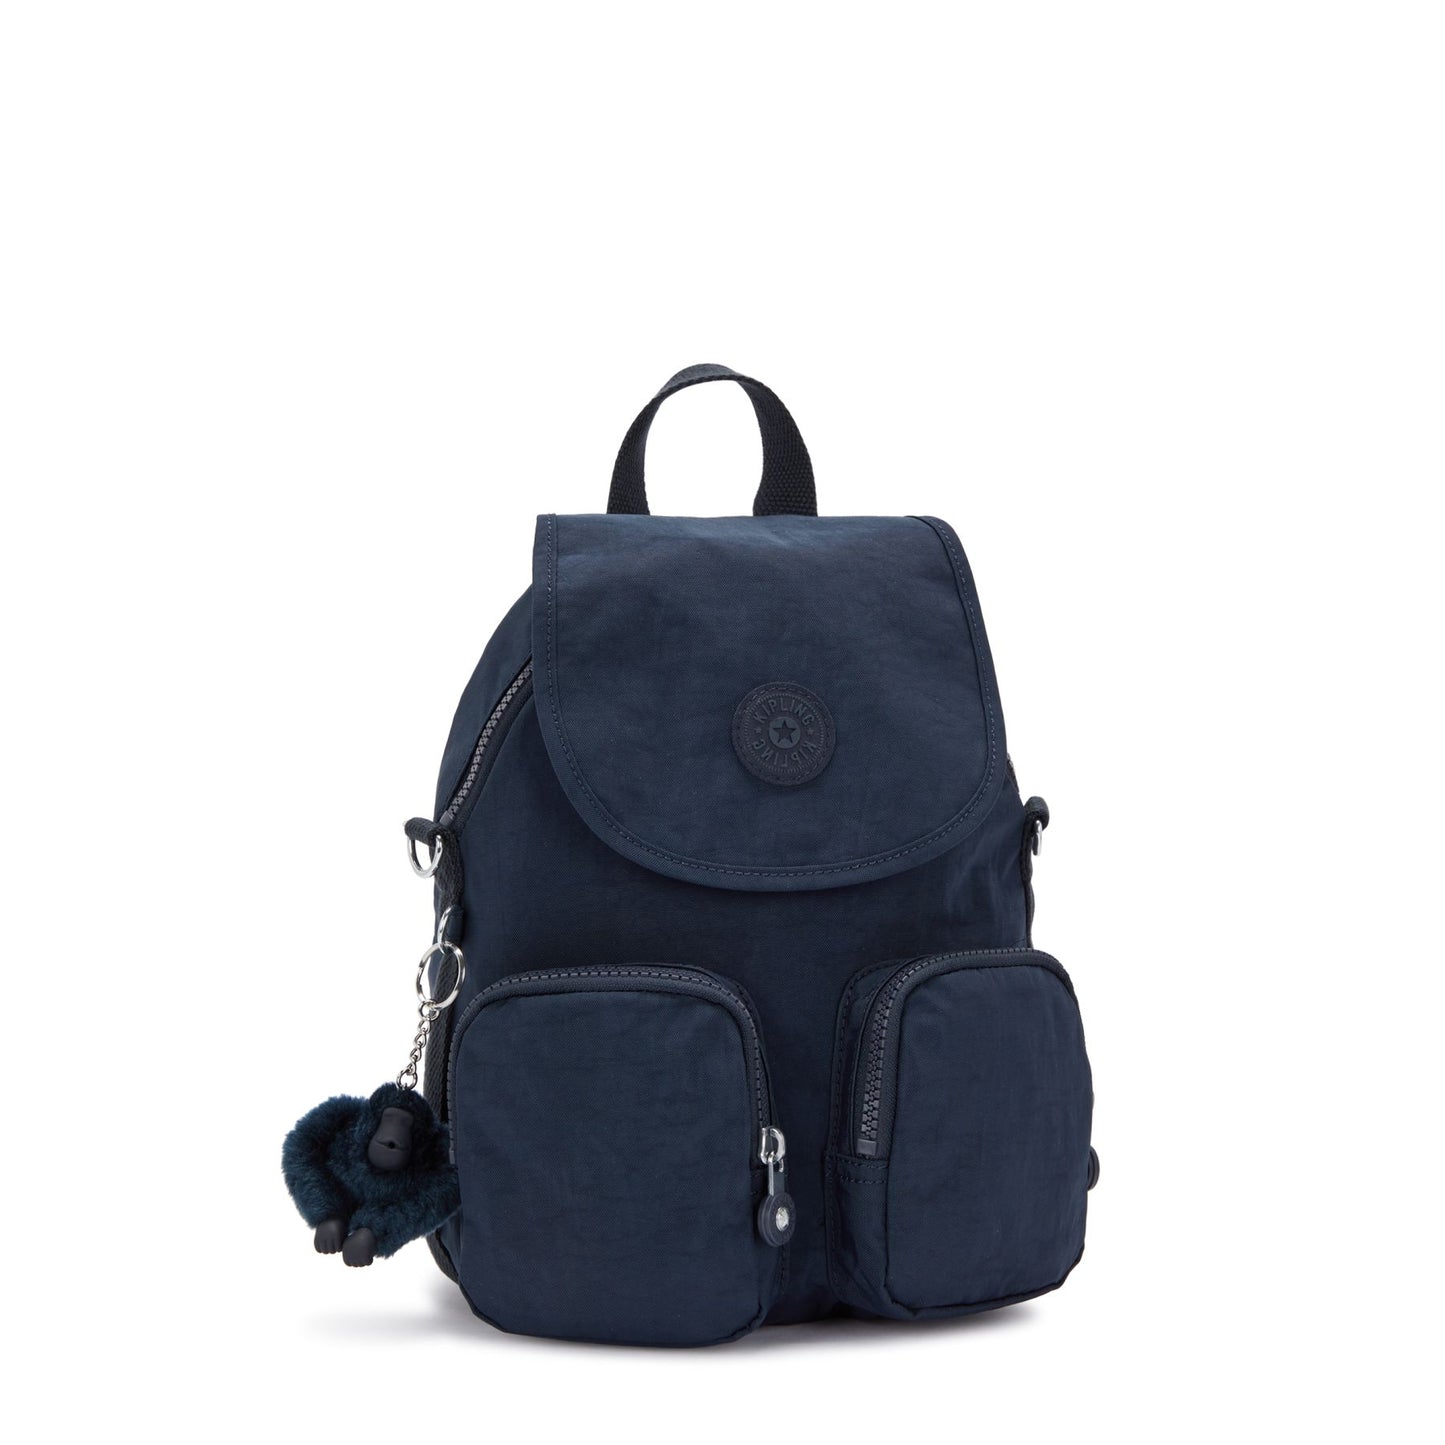 Kipling Firefly Up Blue Bleu Backpack